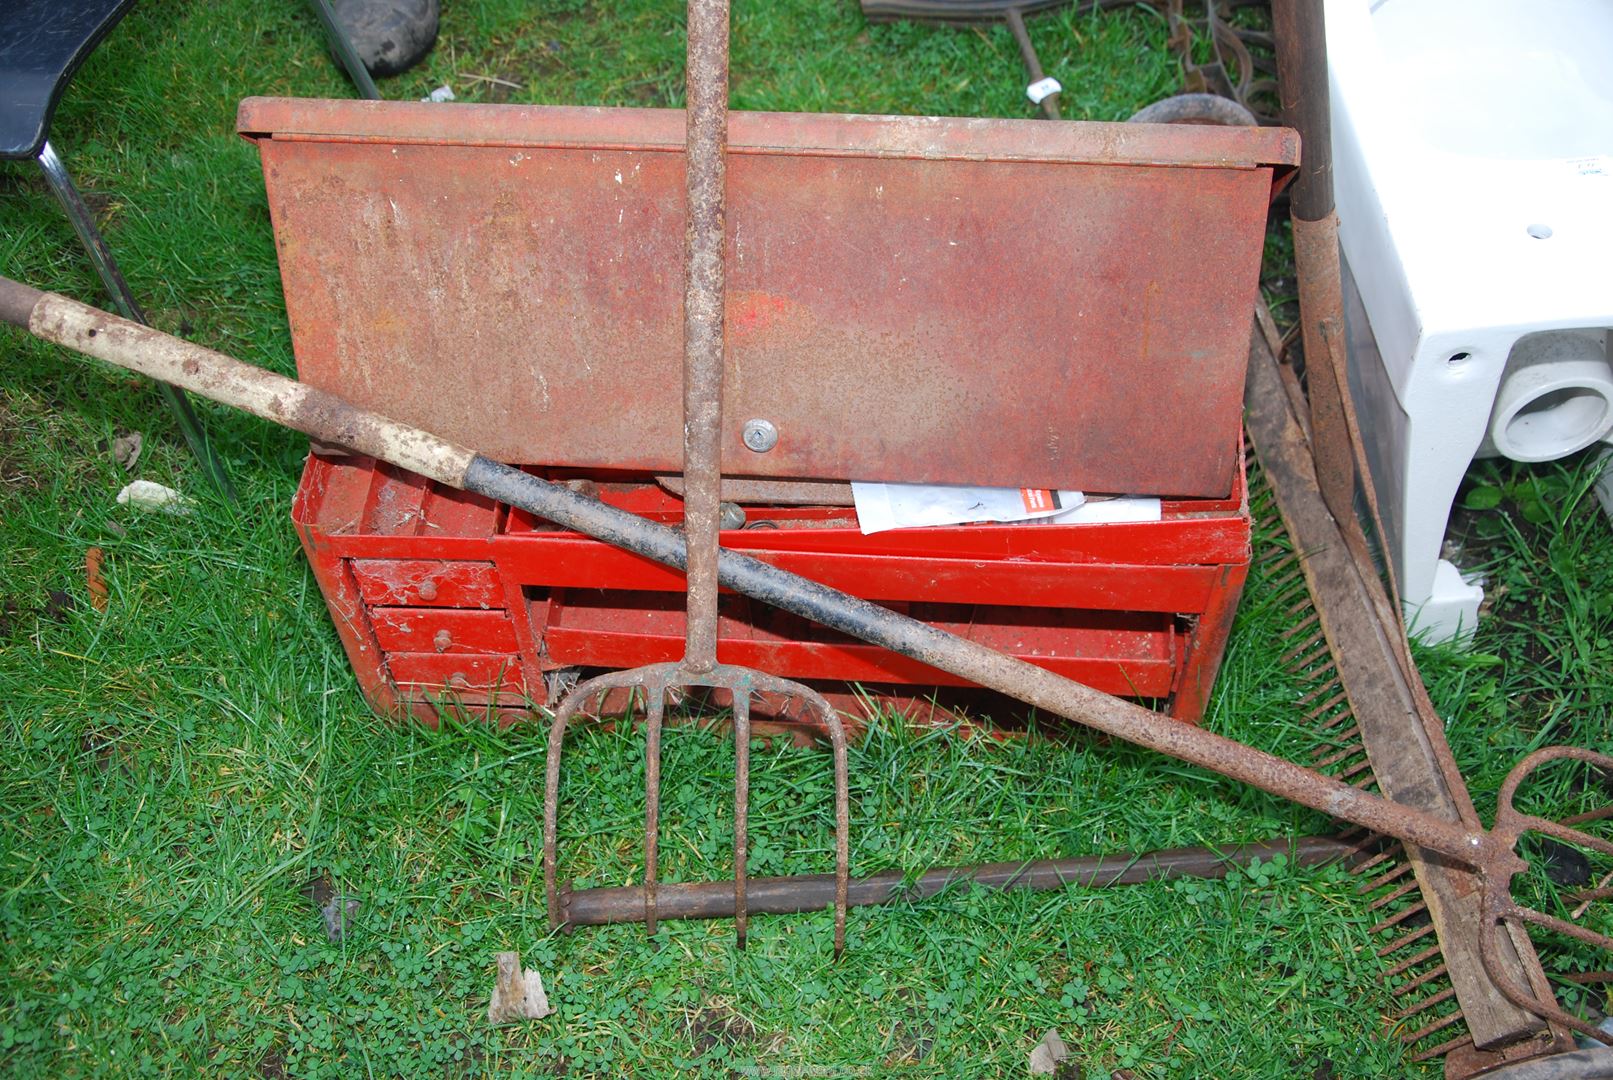 A metal tool box, hydraulic pump, rake and a fork. - Image 2 of 2